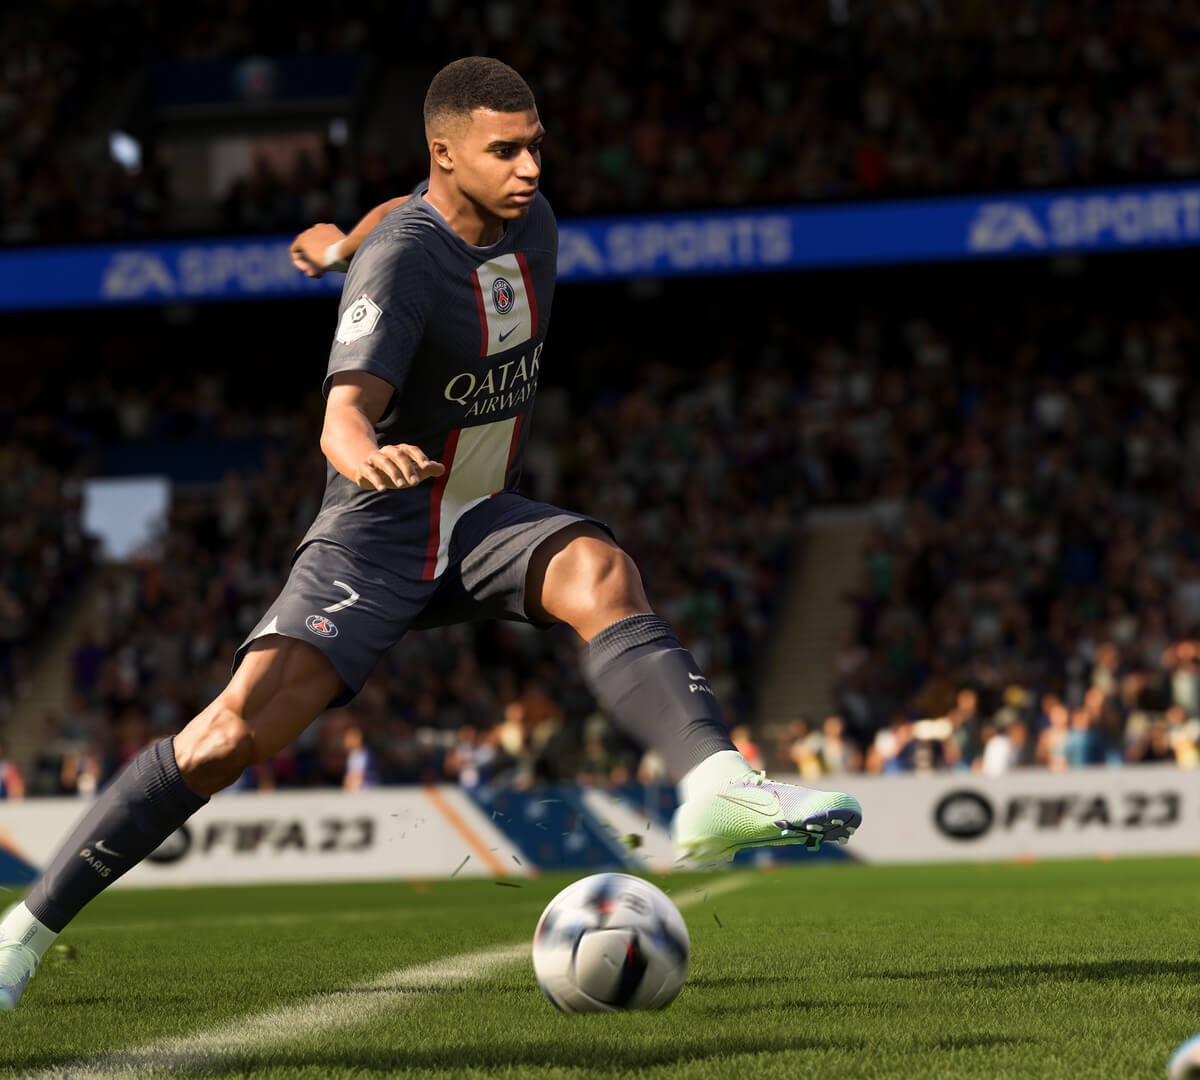 FIFA 23: EA Play Acesso antecipado agora na PlayStation